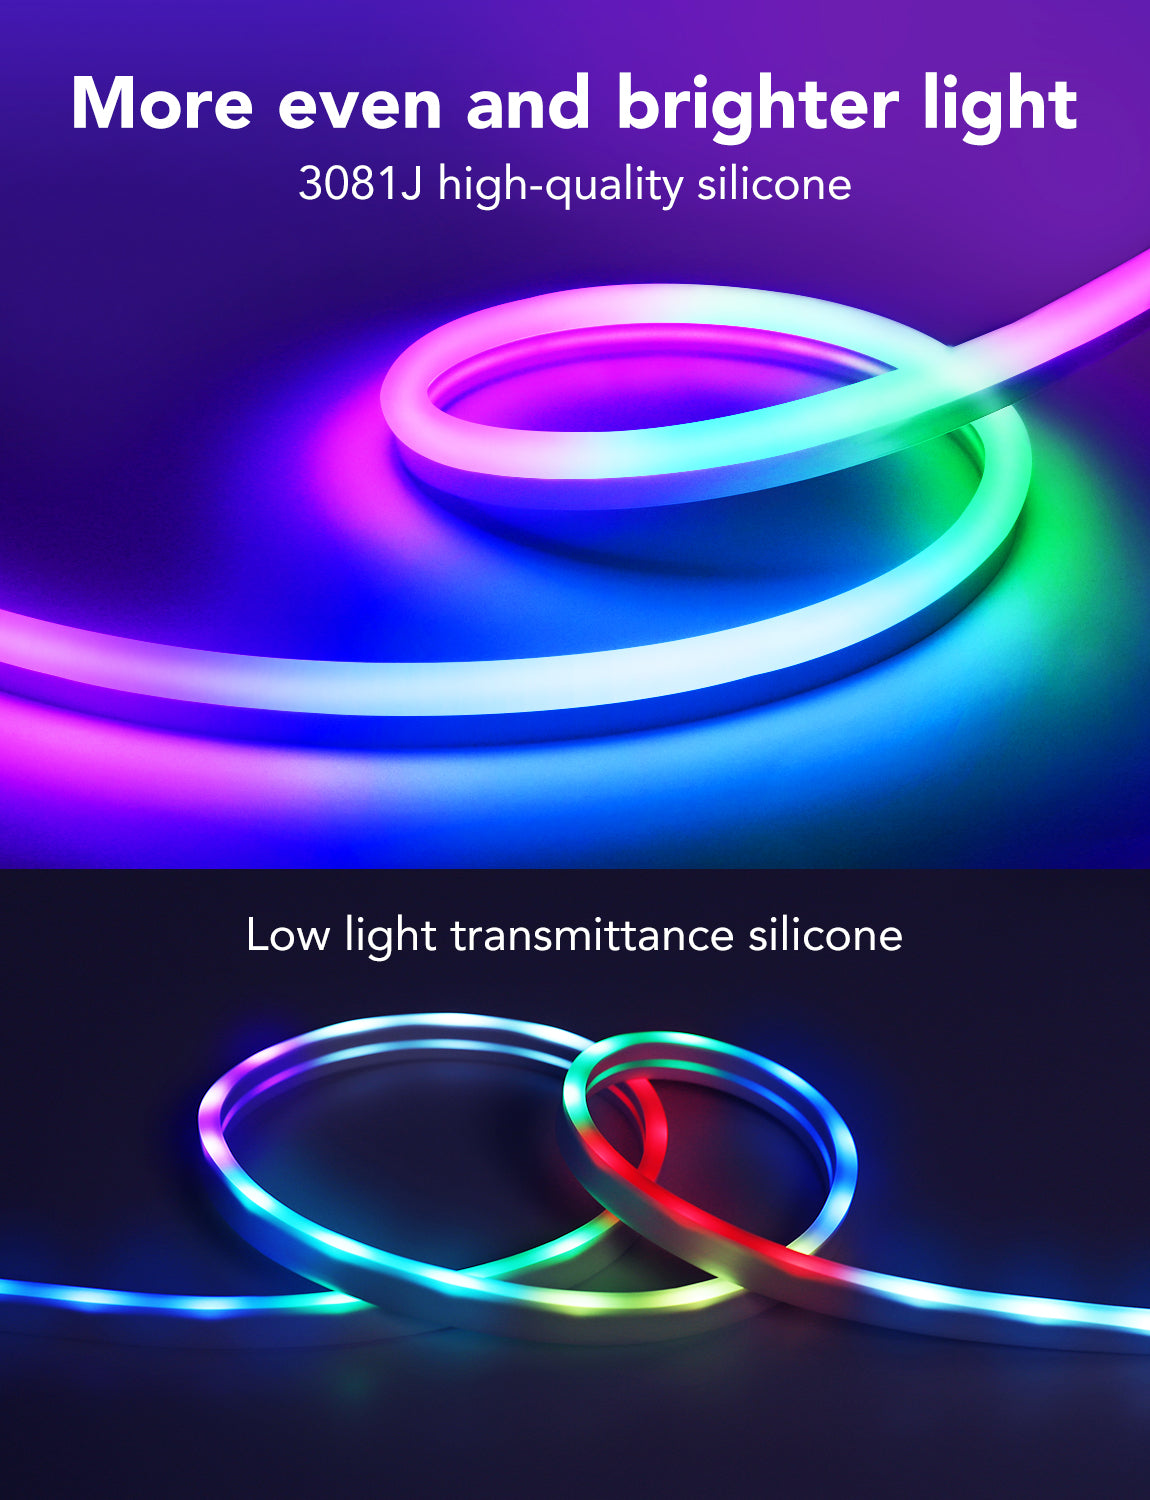 Govee Neon LED Strip Light